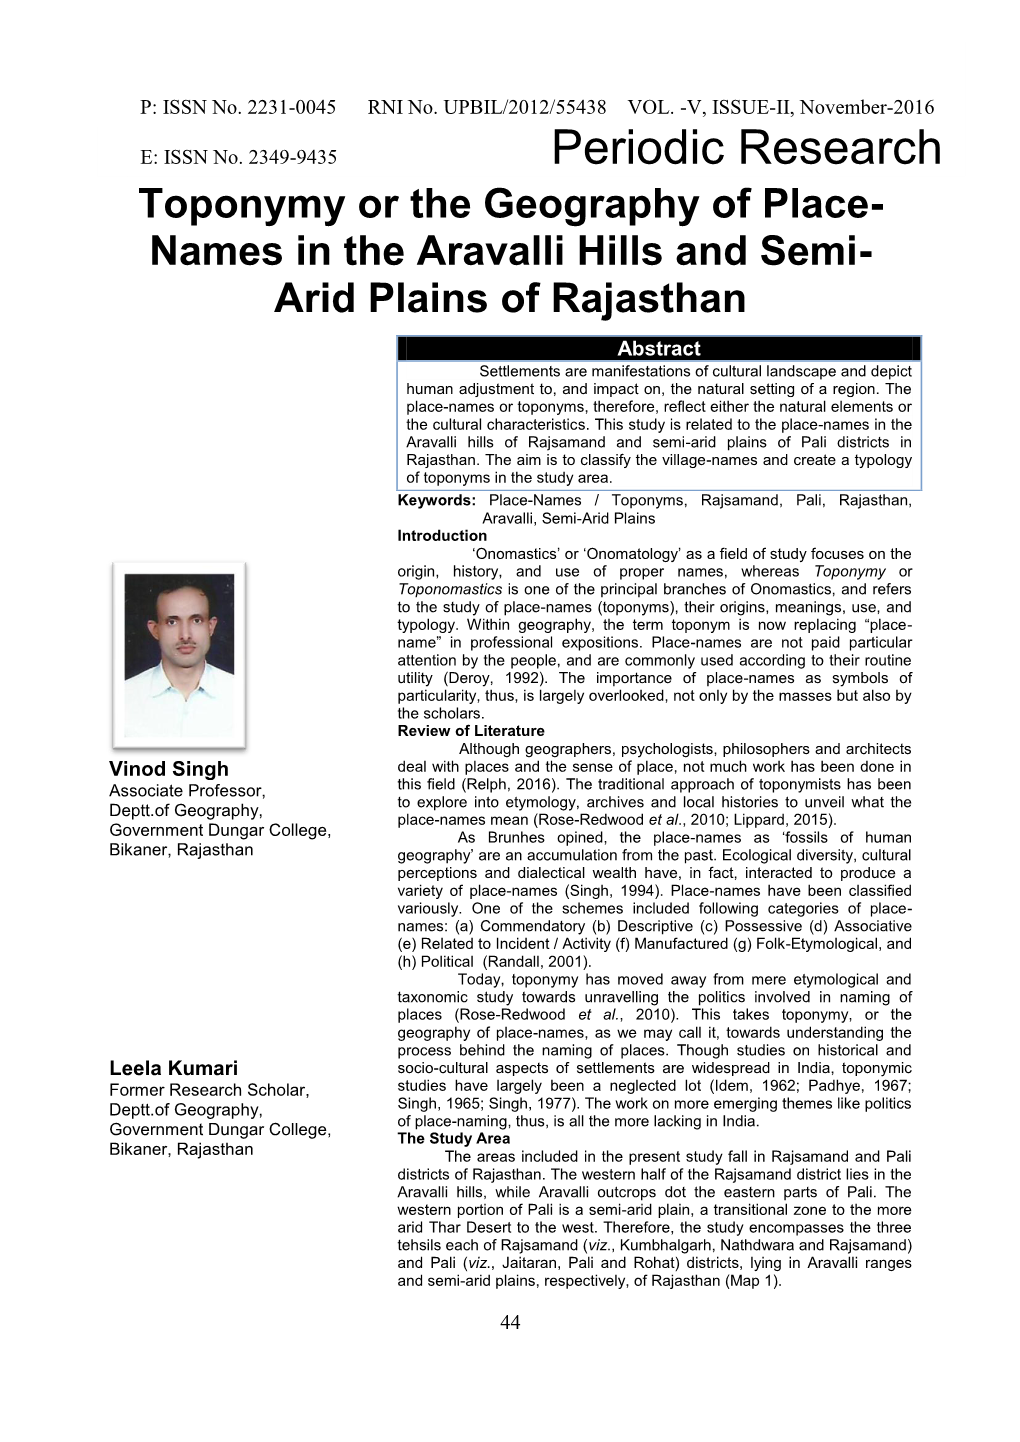 Names in the Aravalli Hills and Semi- Arid Plains of Rajasthan